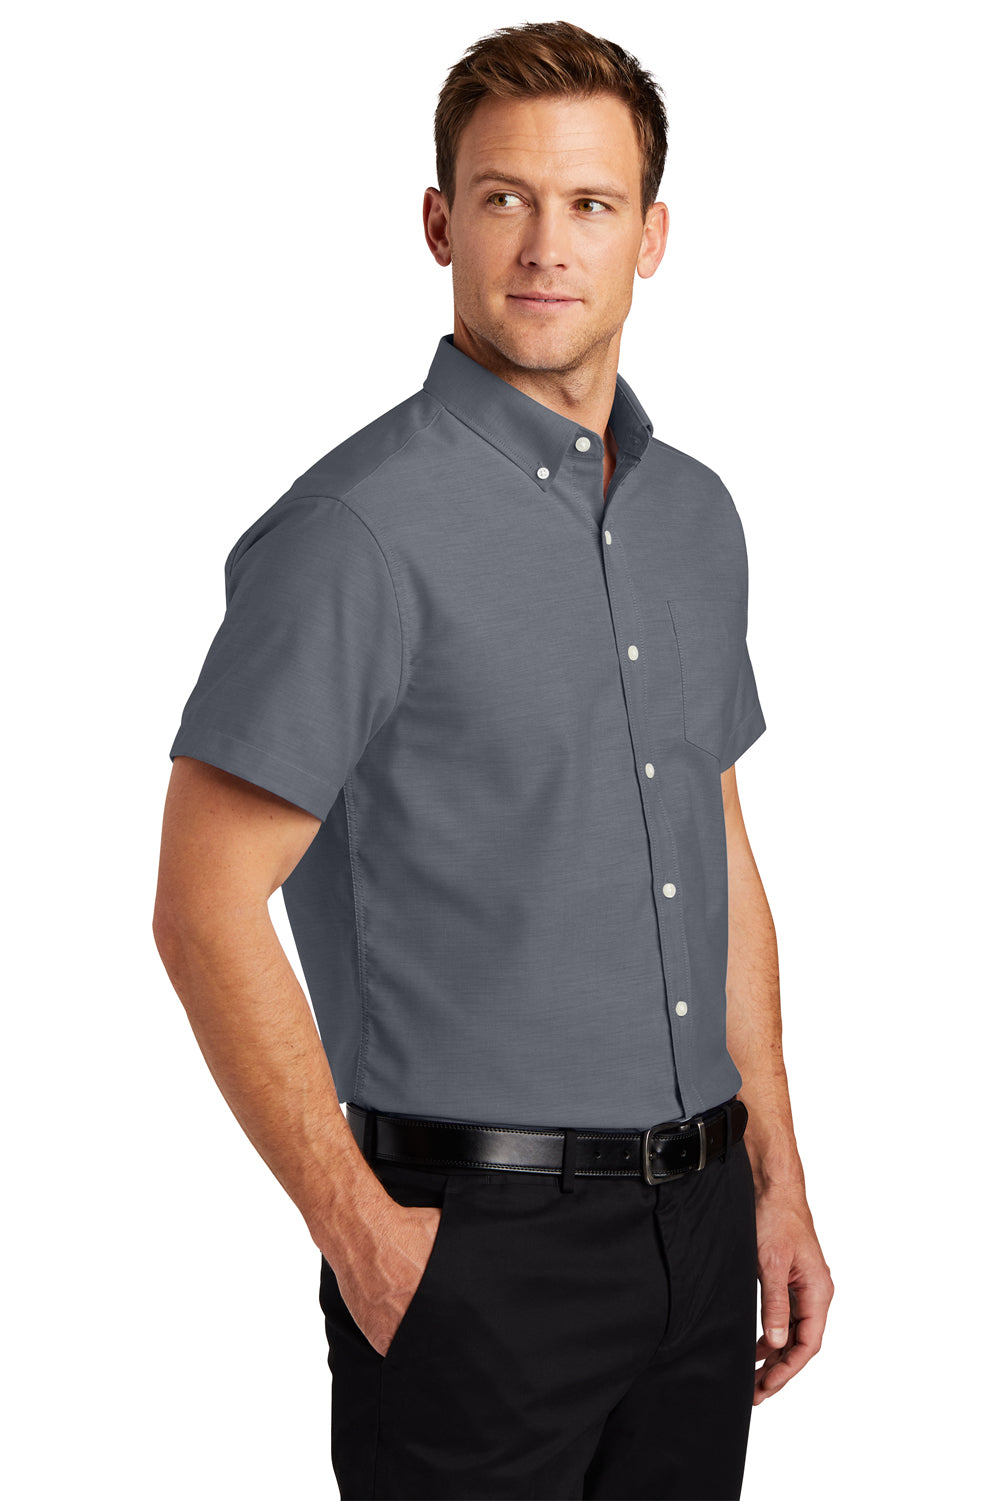 Port Authority S659 SuperPro Oxford Wrinkle Resistant Short Sleeve Button Down Shirt w/ Pocket Black 3Q